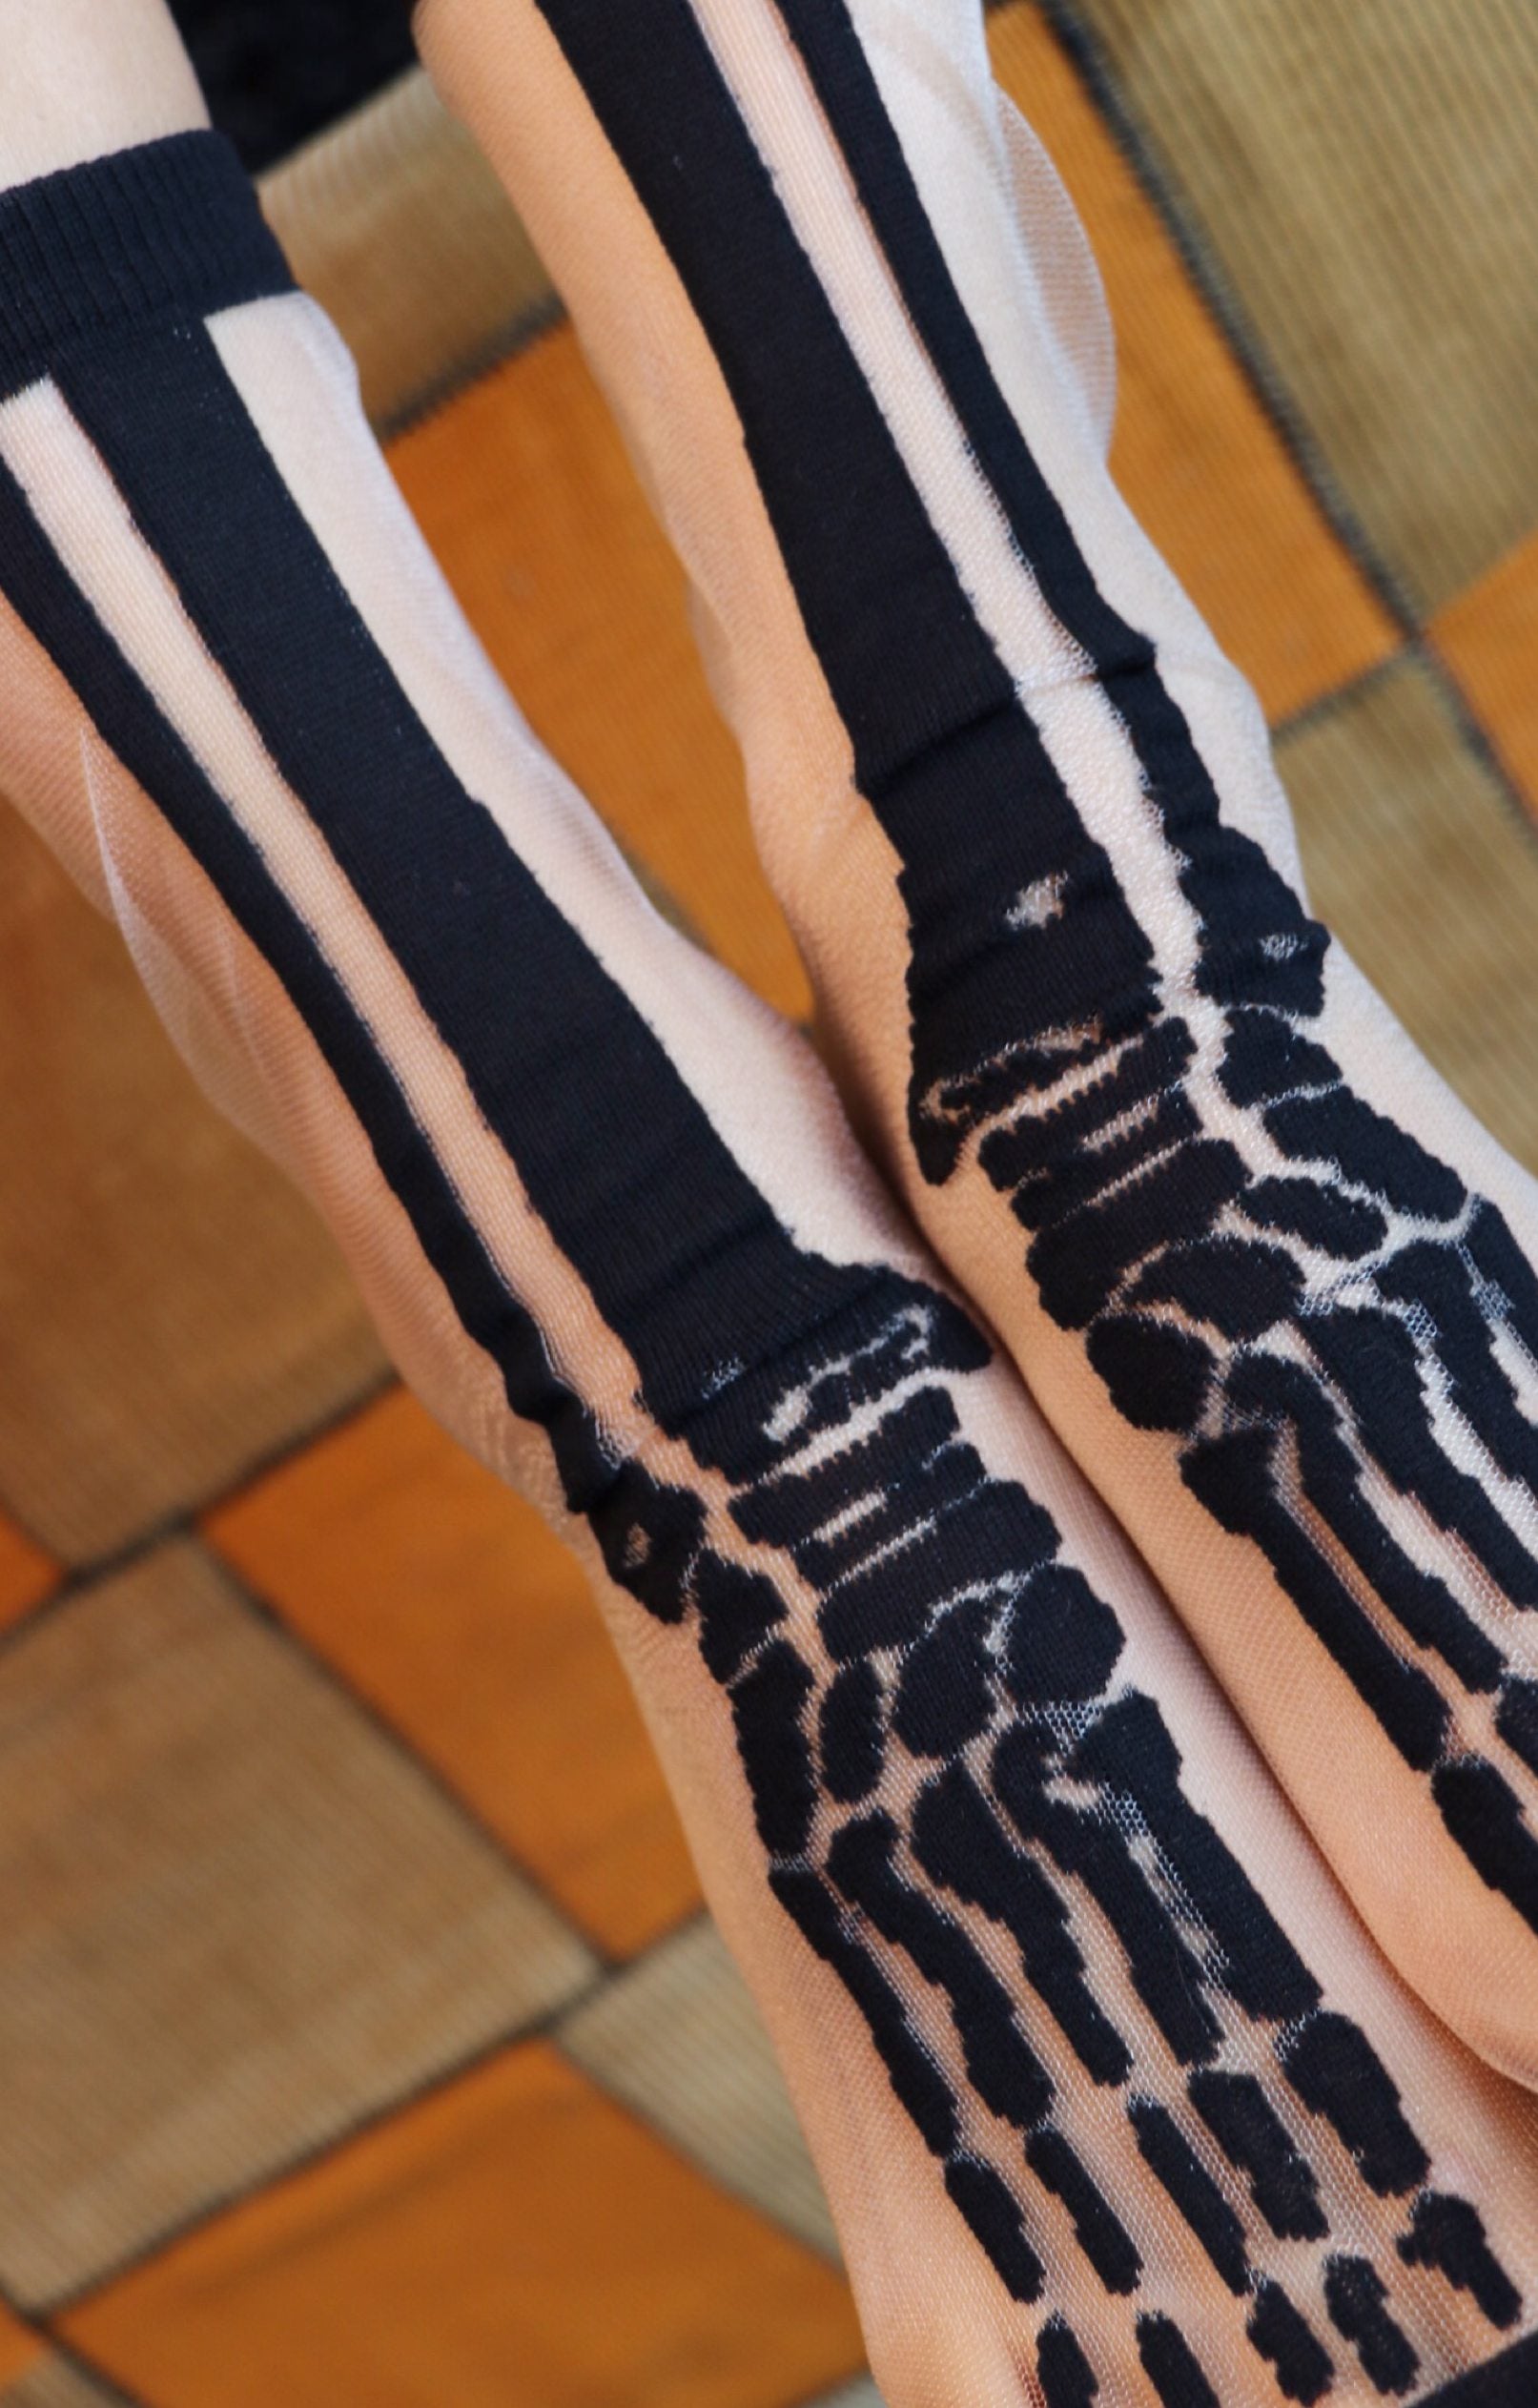 TABBISOCKS brand Sheer Skeleton Socks in the color white transparent fabric with black bone prints on the socks, female foot in Halloween costume.